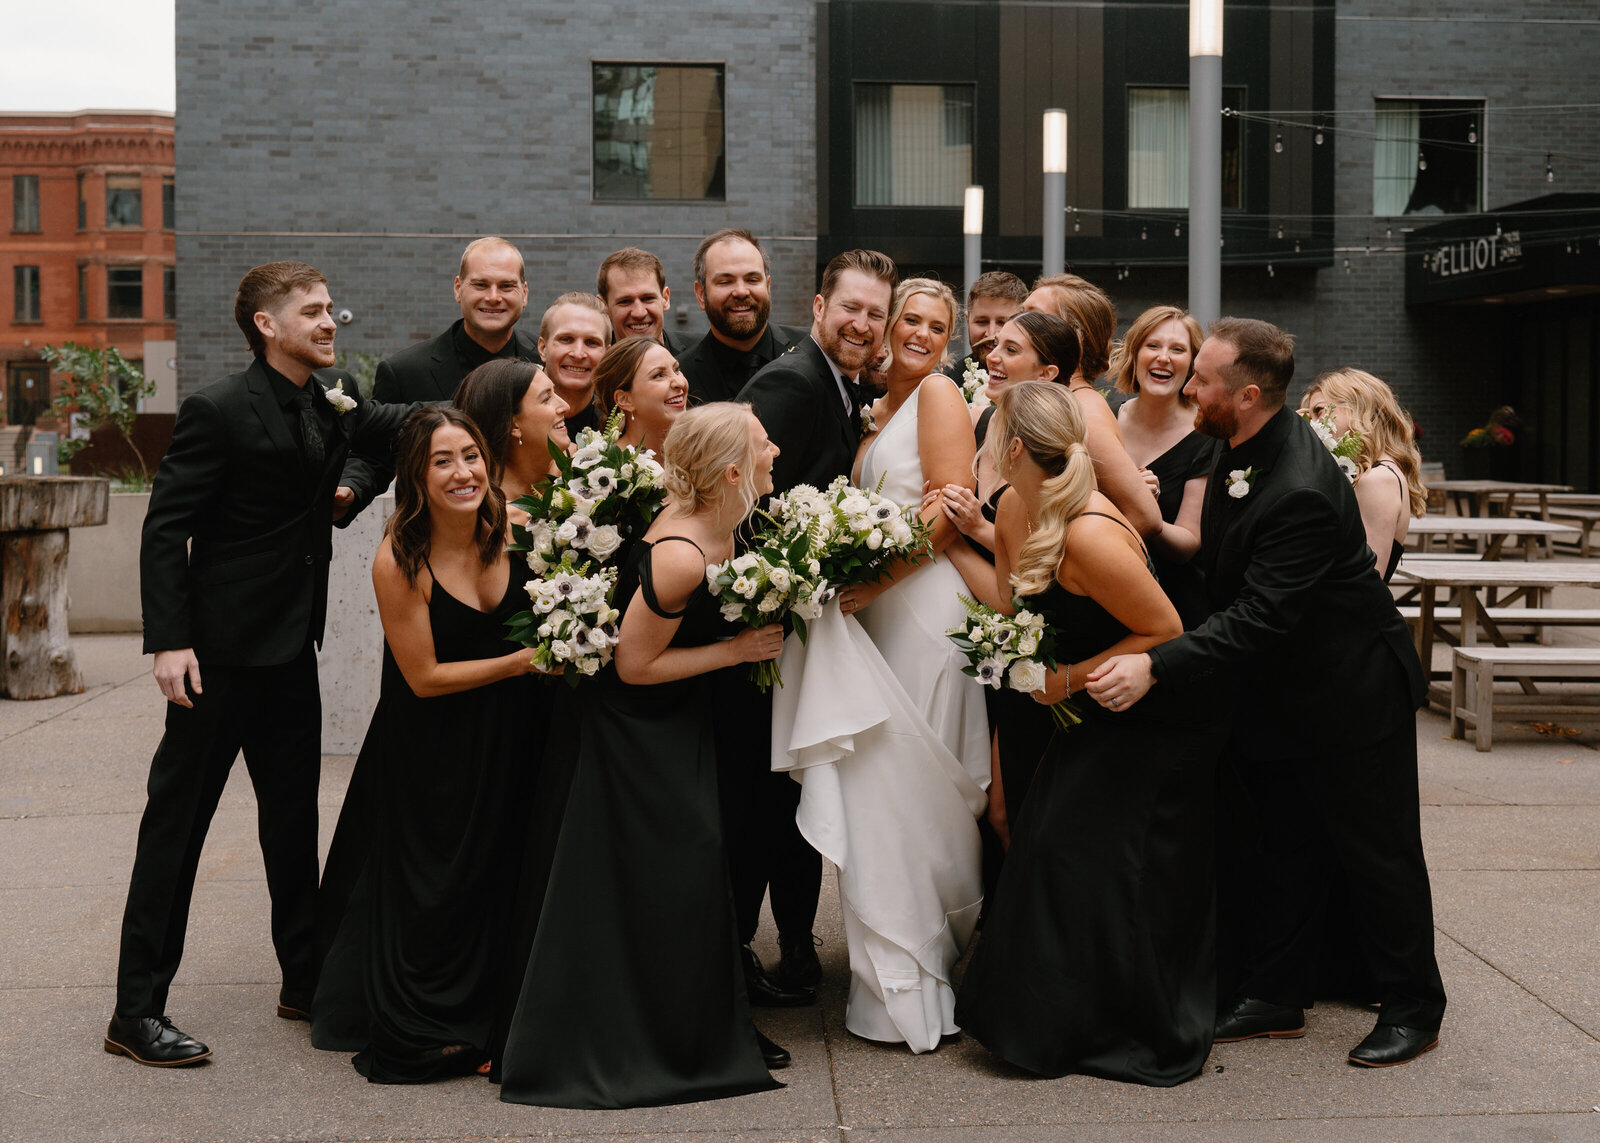 fun-wedding-party-group-black-attire